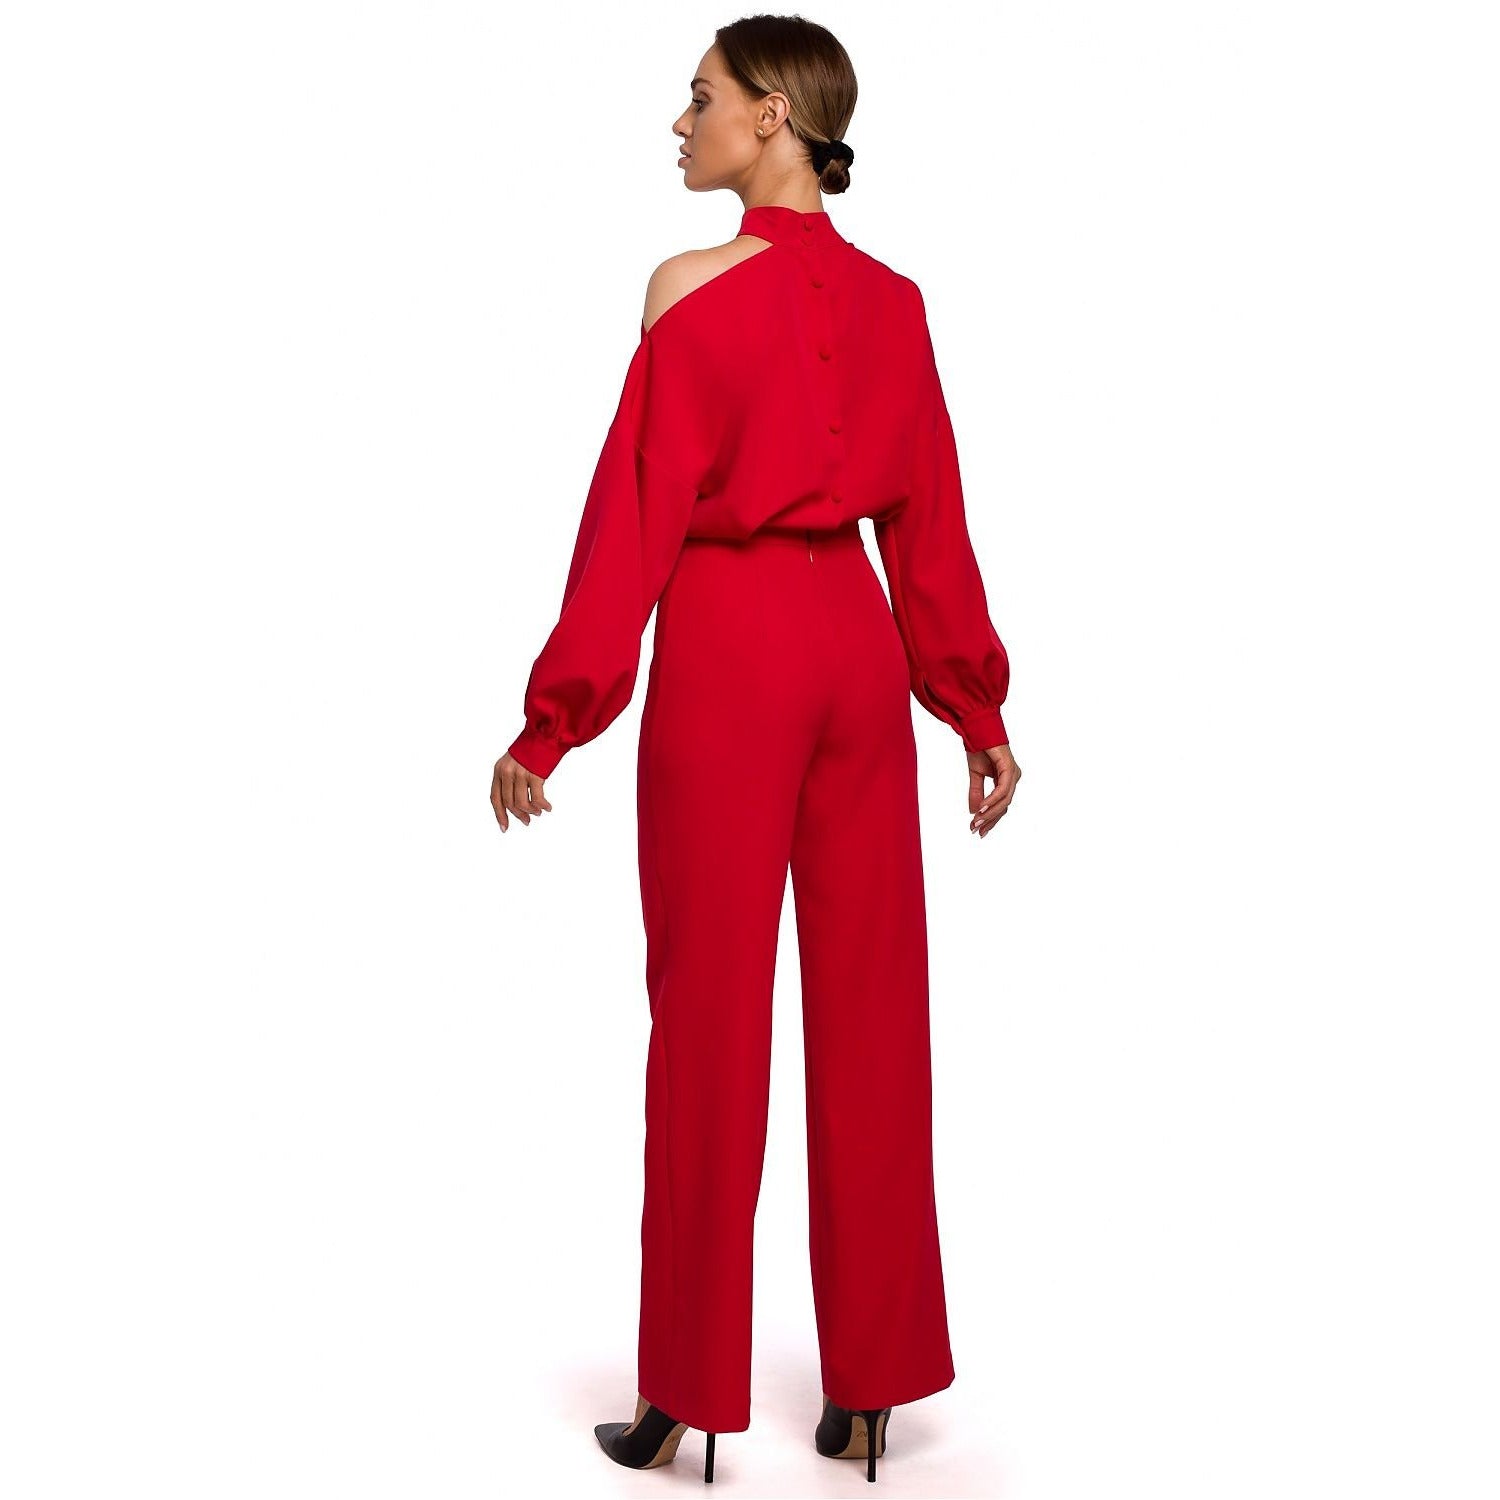 Red Jumpsuit Suit Model 147459 Moe - KME means the very best